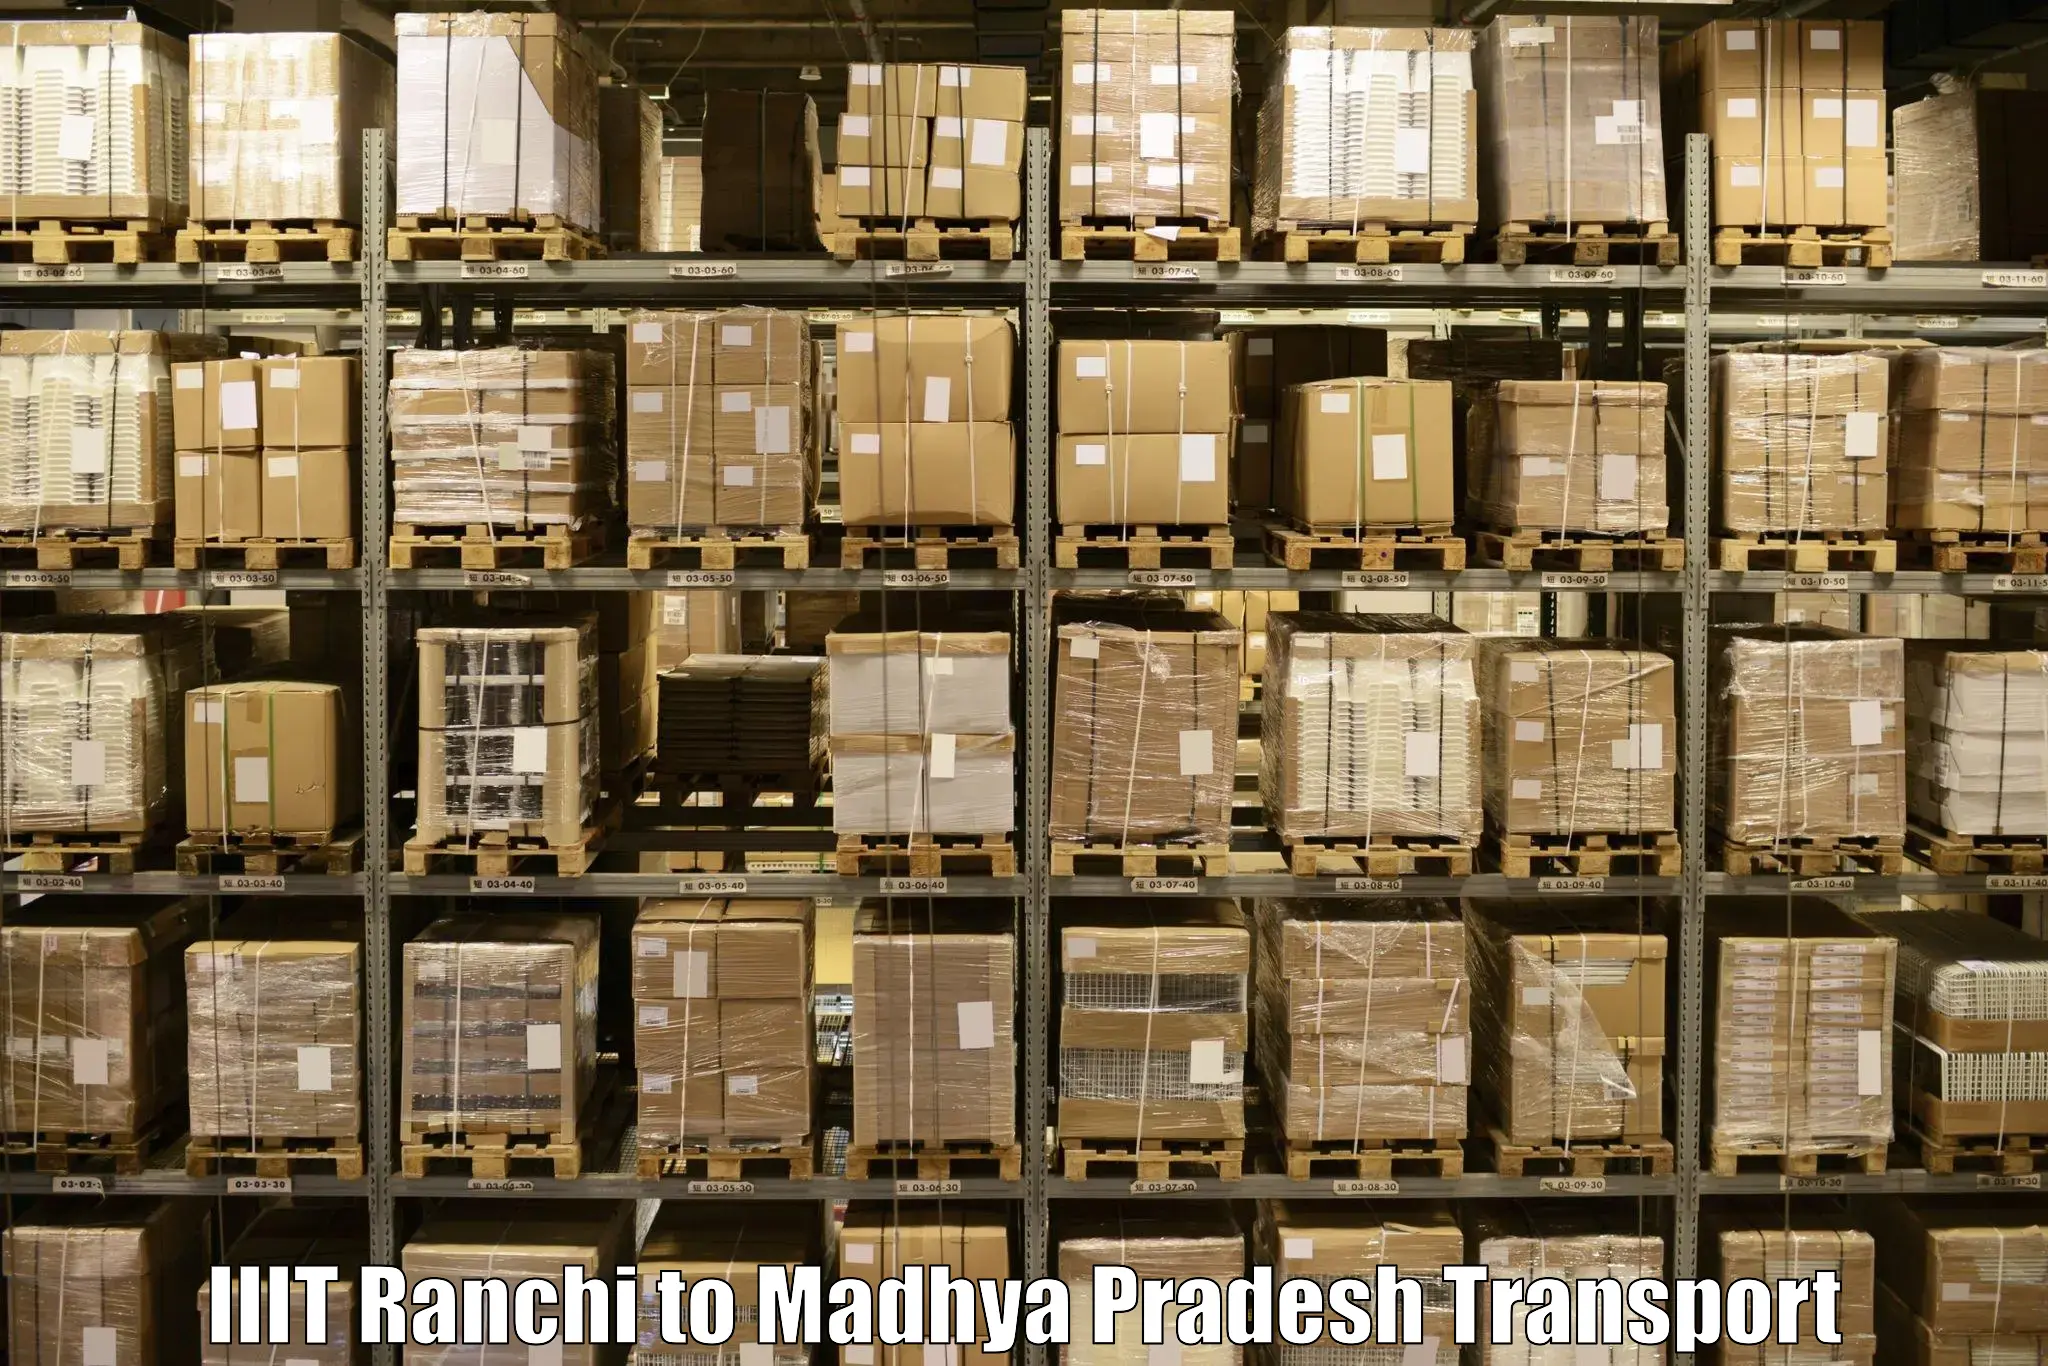 Transport in sharing in IIIT Ranchi to Garoth